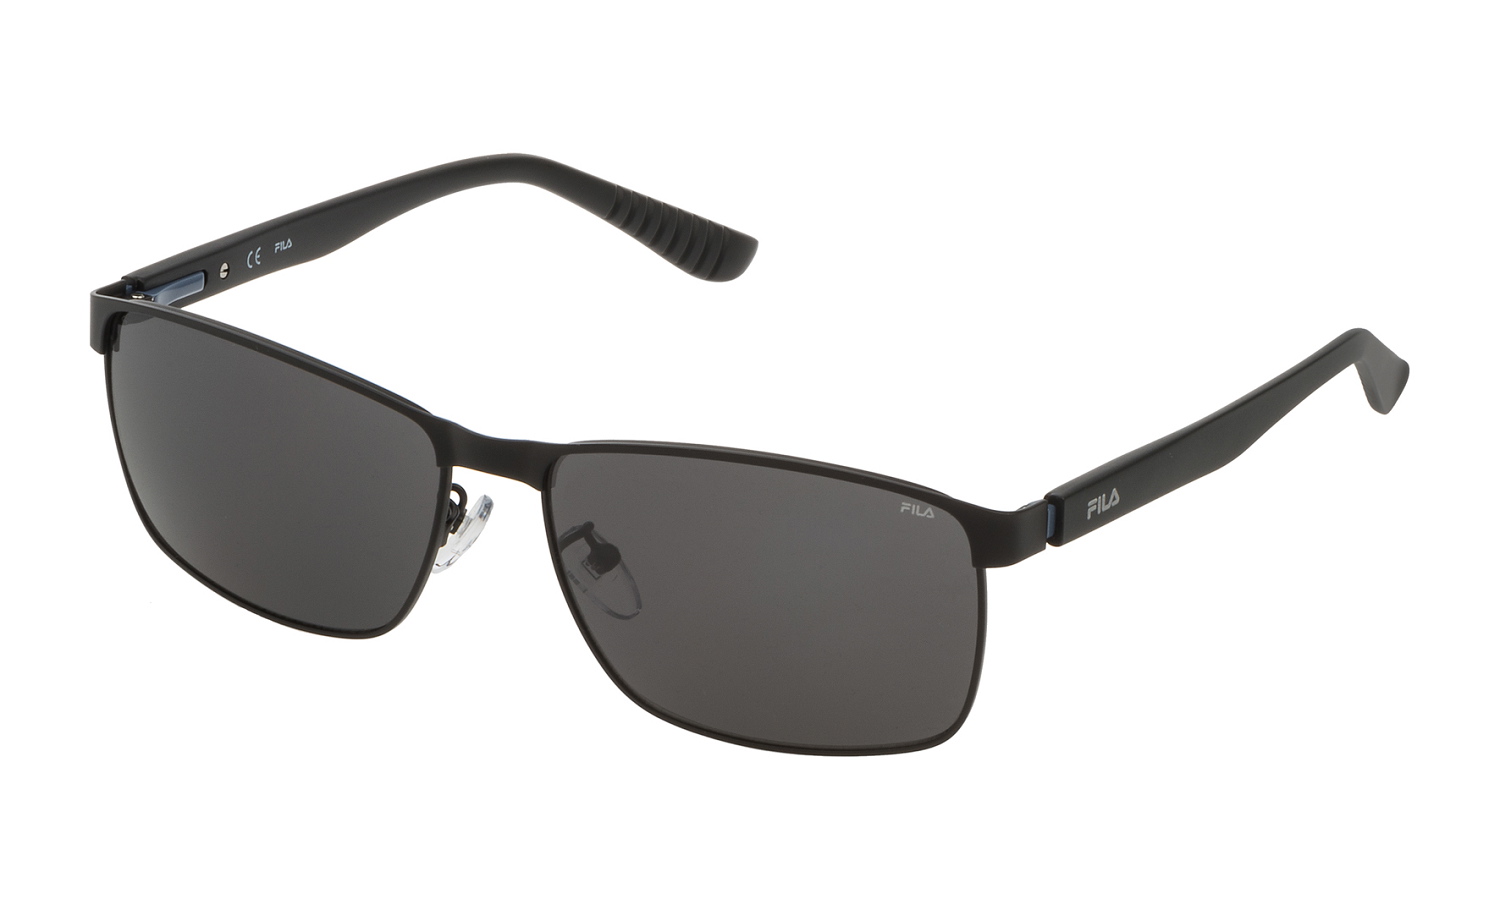 Fila SF 9920 Sunglasses from $108.60 | Fila Sunglasses | Designer ...